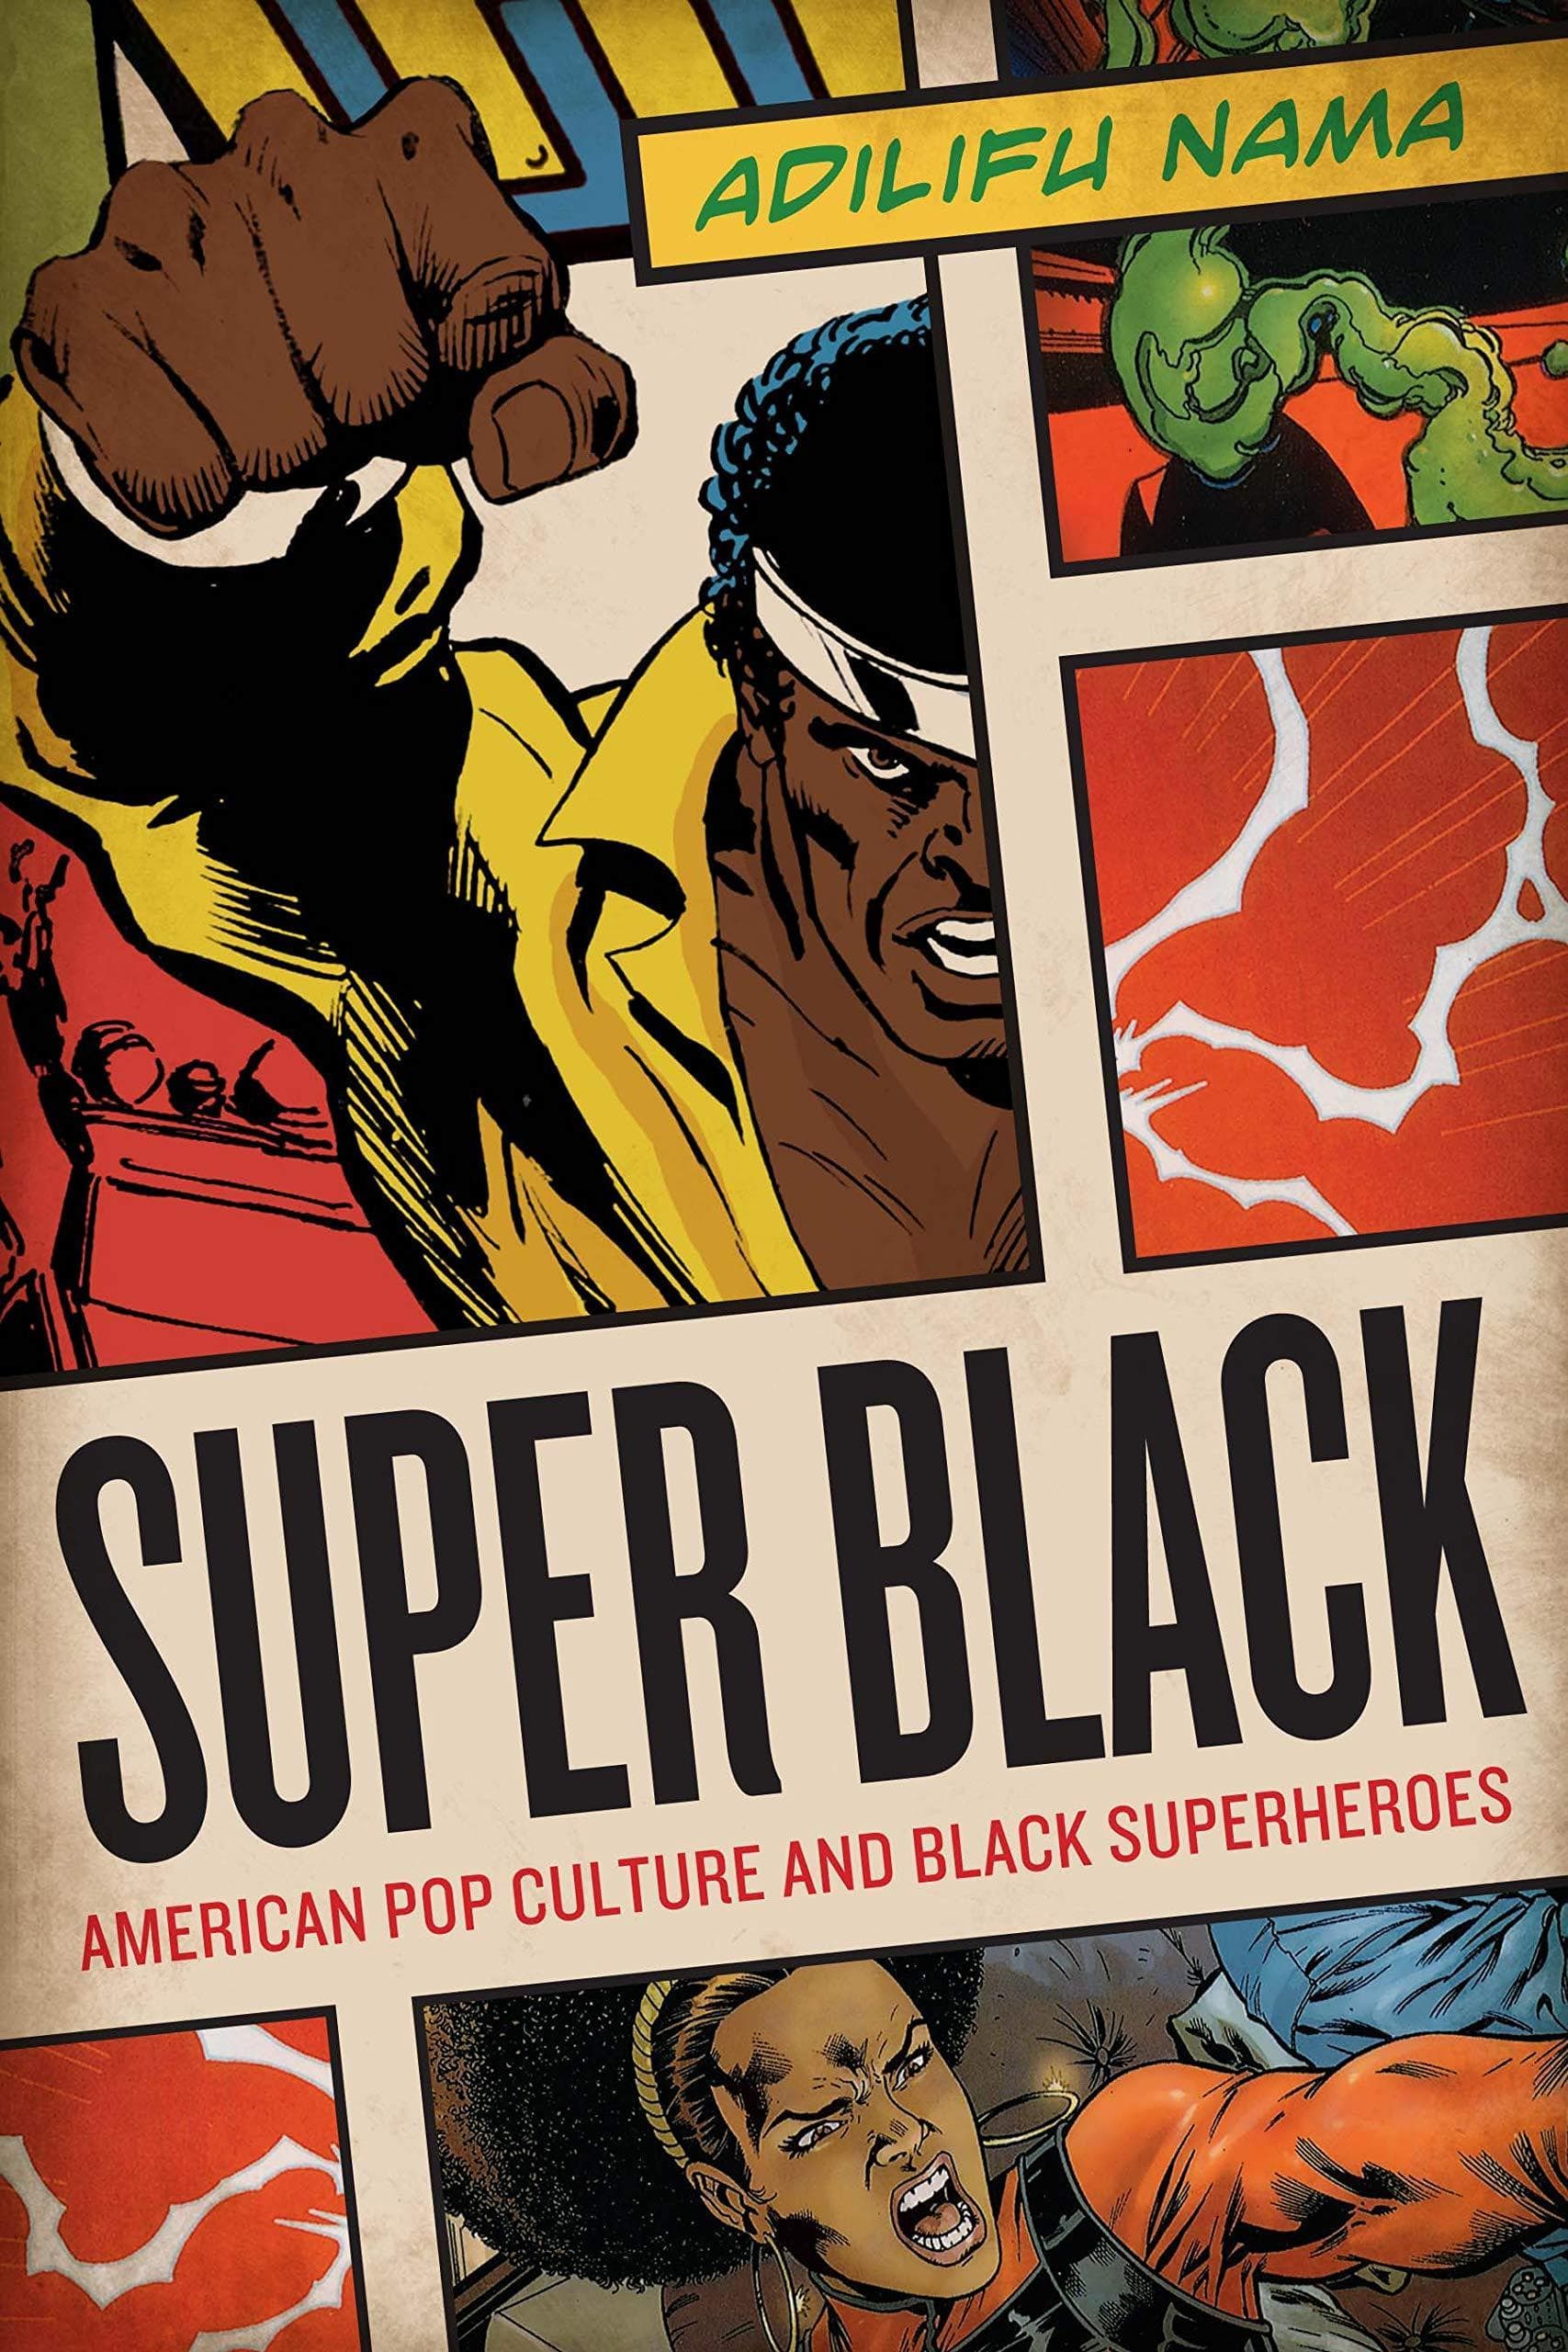 LibrairieRacines Super Black: American Pop Culture and Black Superheroes by Adilifu Nama